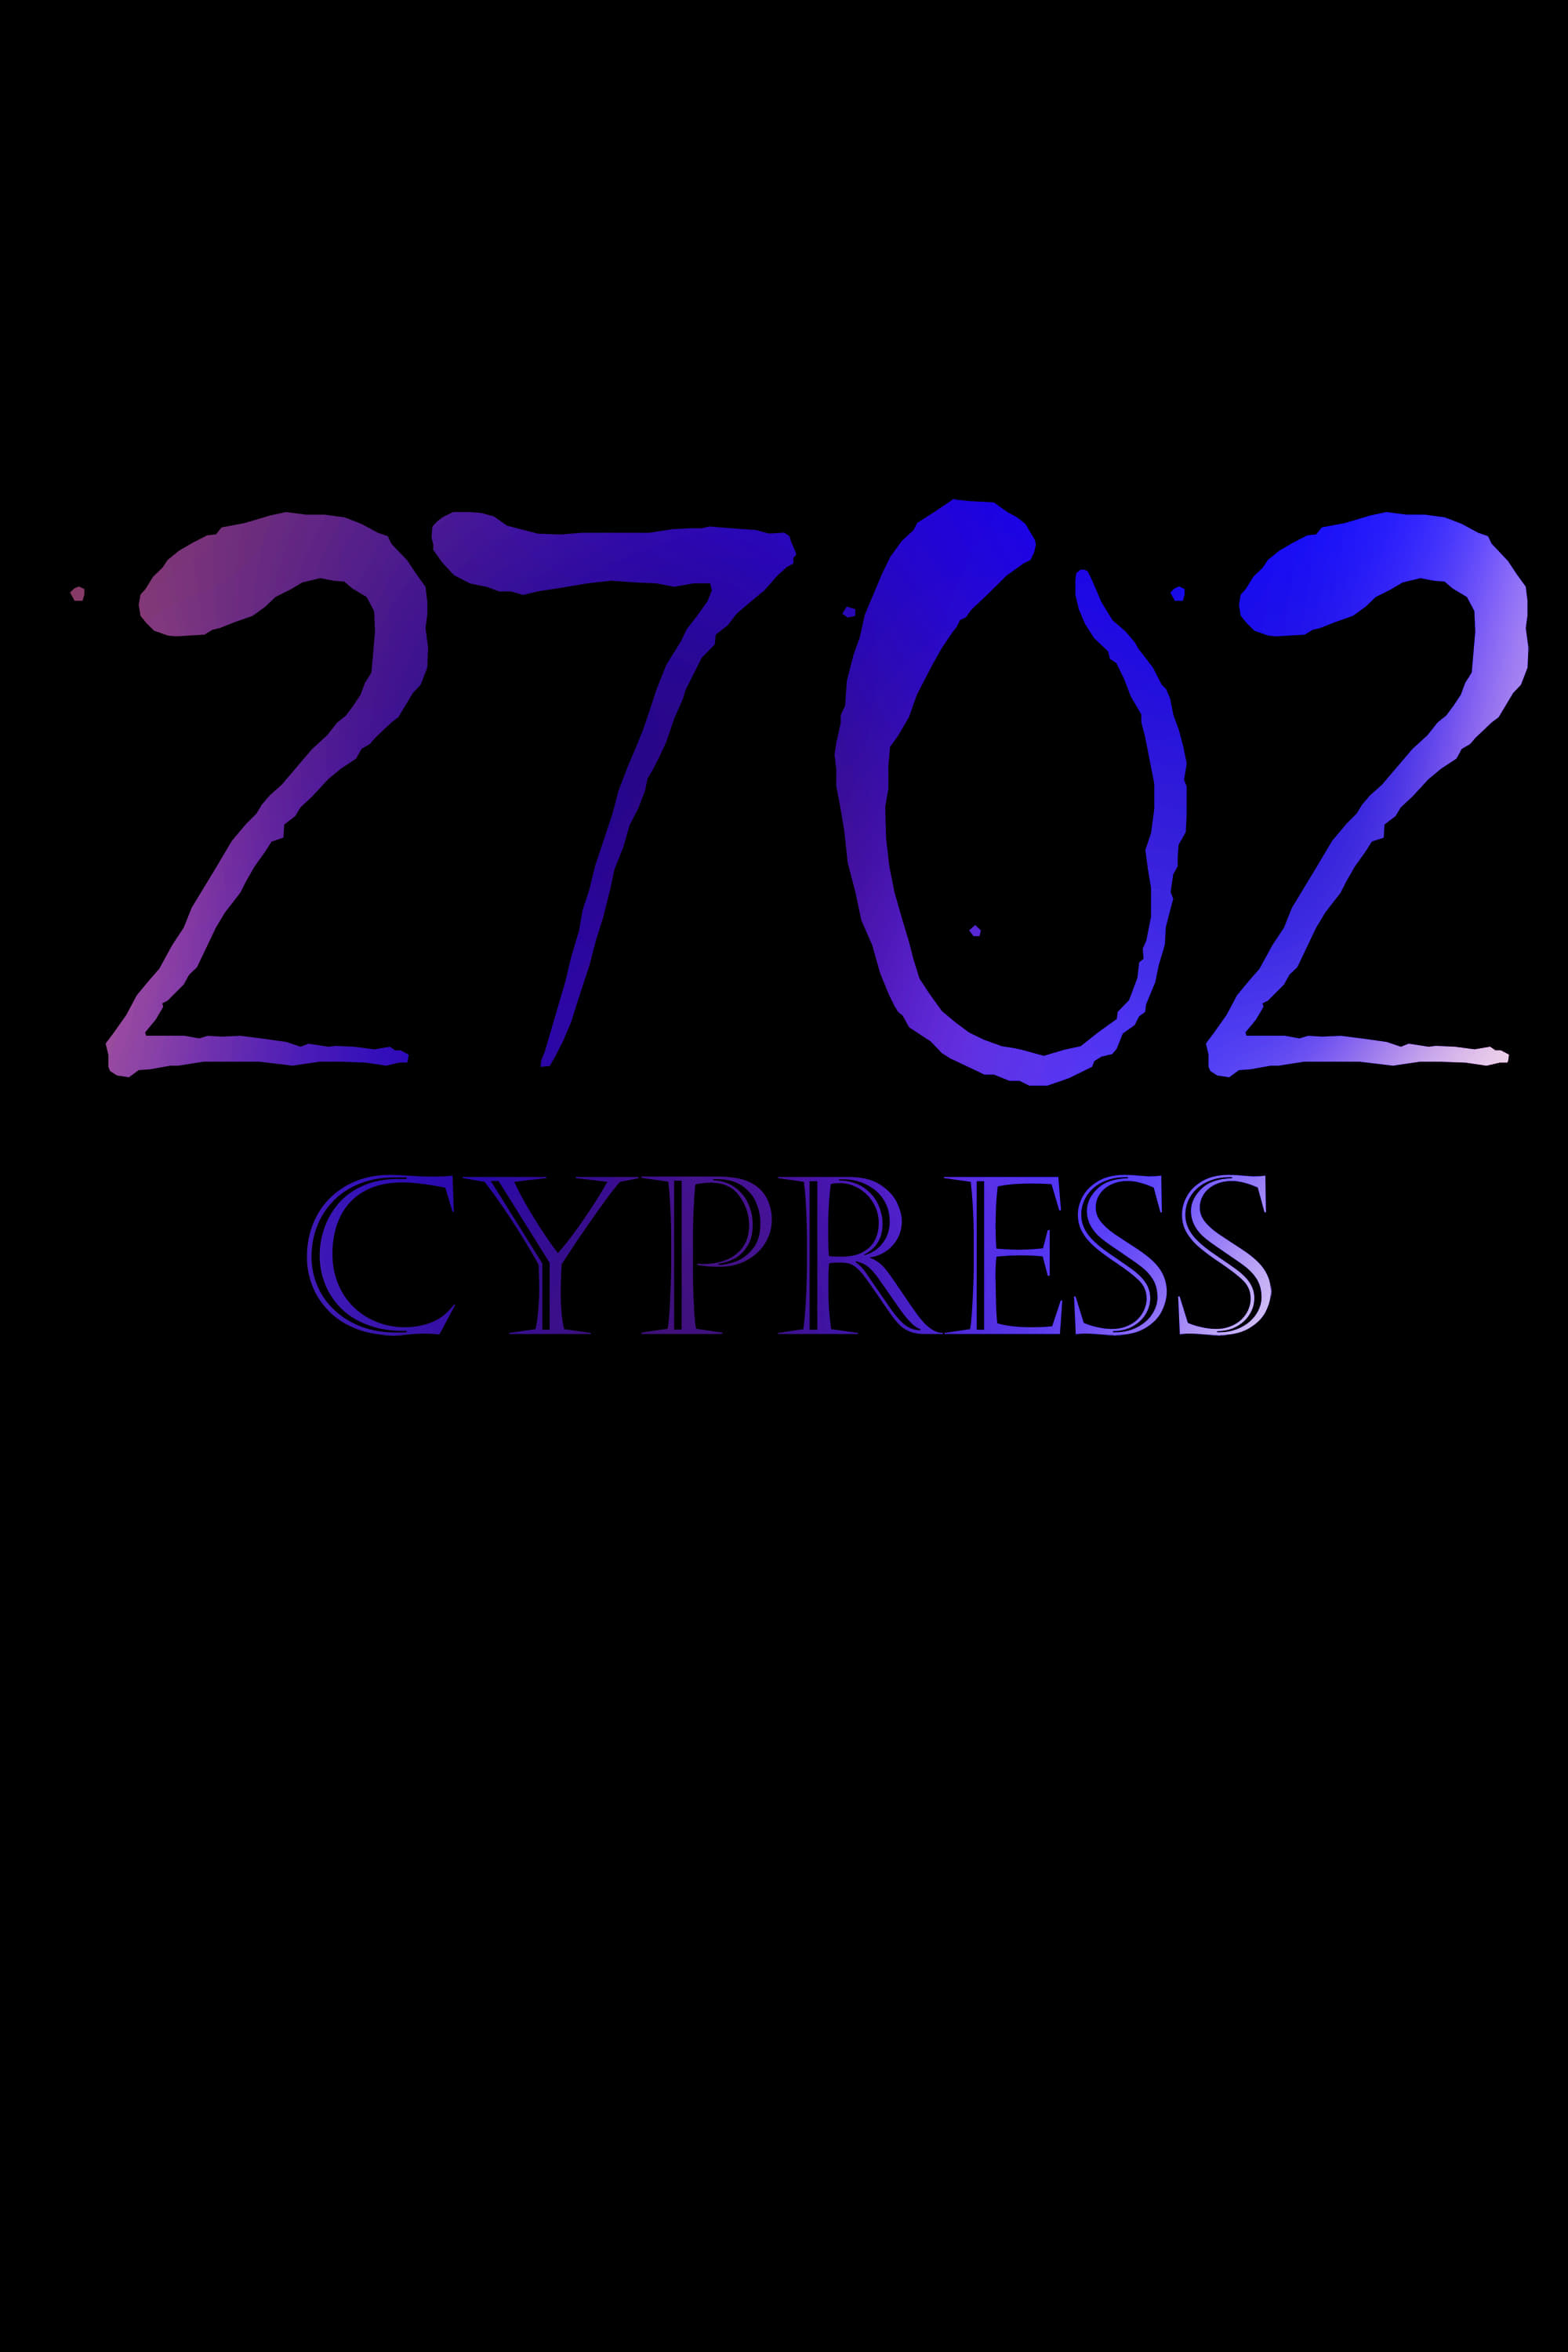 2702 Cypress